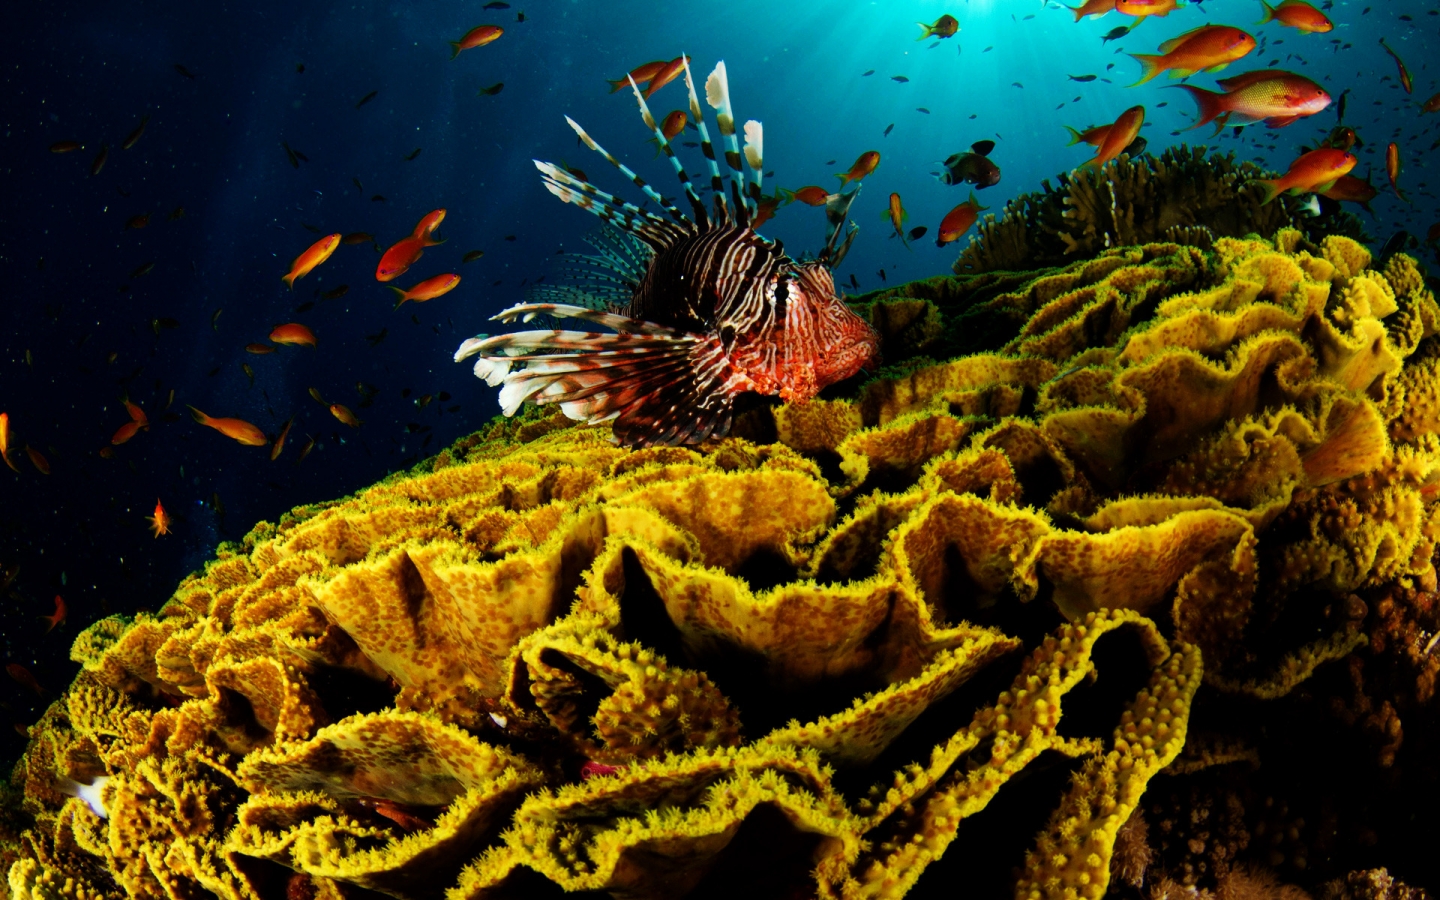 Underwater World Activity for 1440 x 900 widescreen resolution